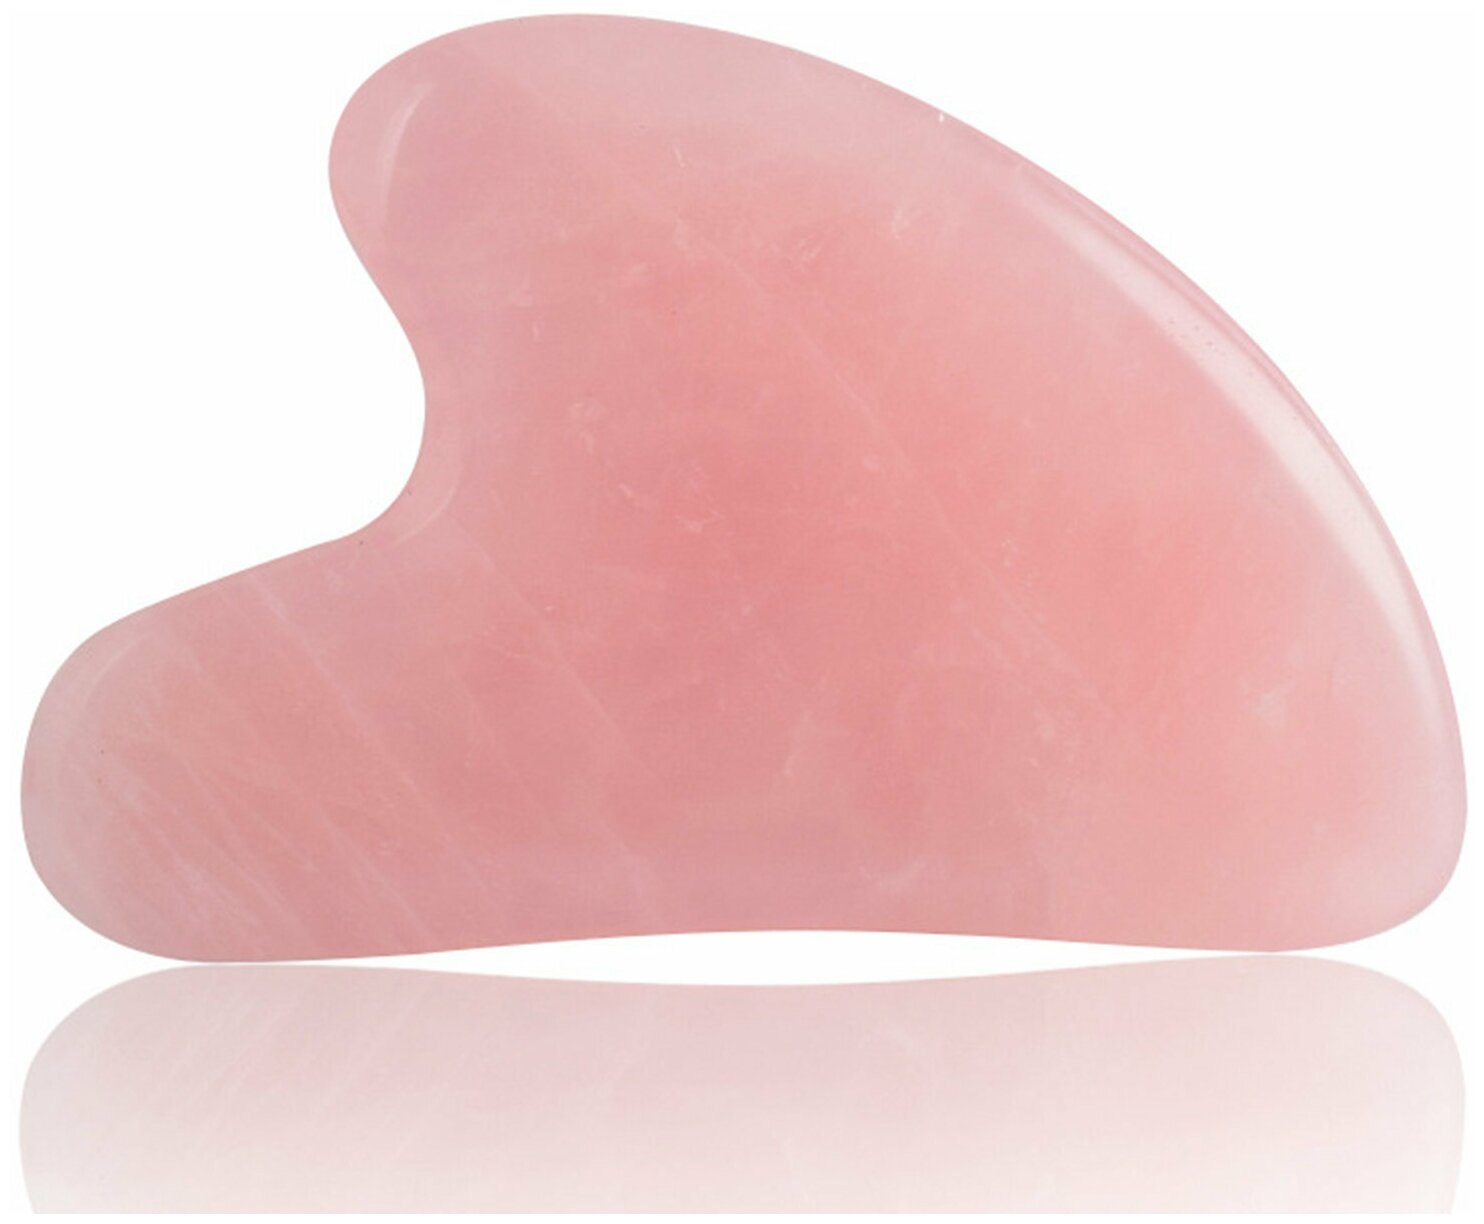 Mассажер Гуа Ша для лица (кварц розовый) AYOUME Massager GUASHA rose quartz (1 шт)